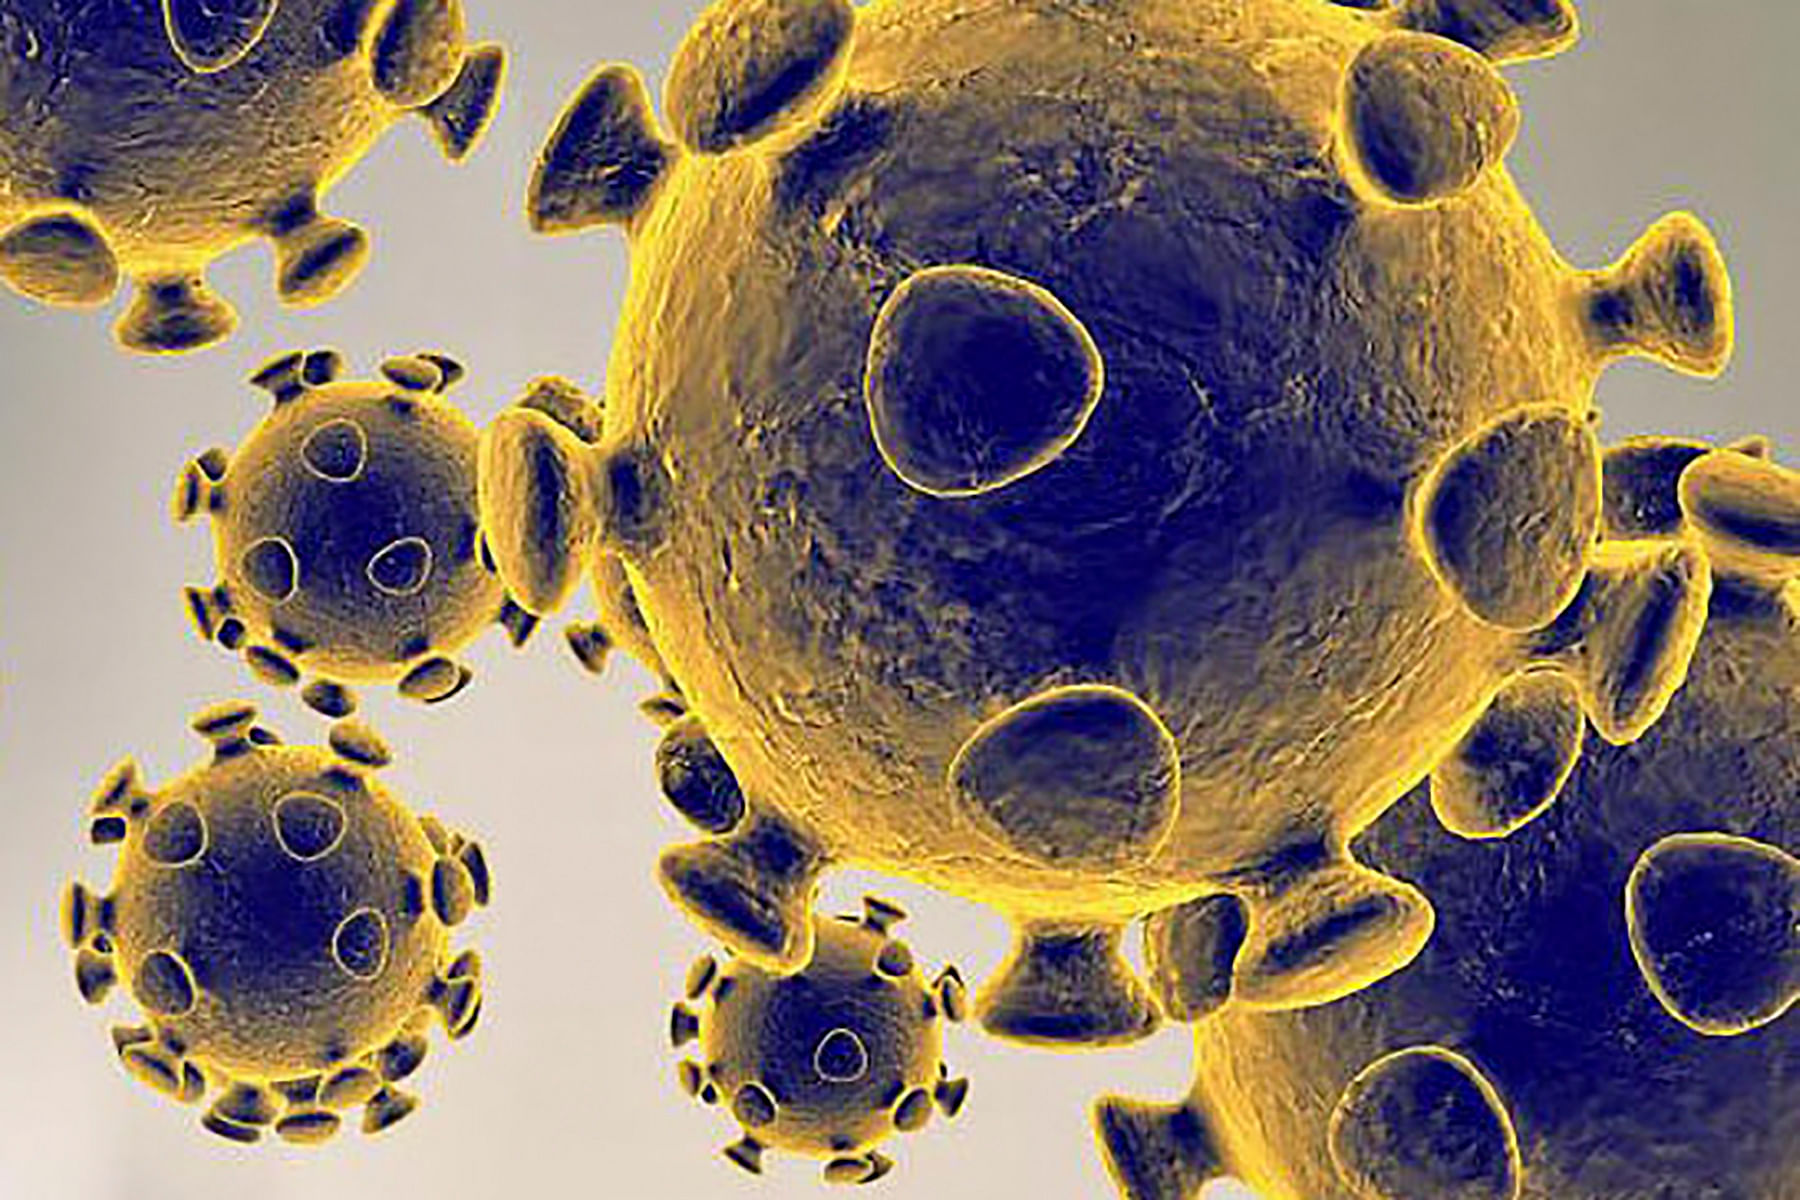 Coronavirus illustration. (Credit: AFP Photo)